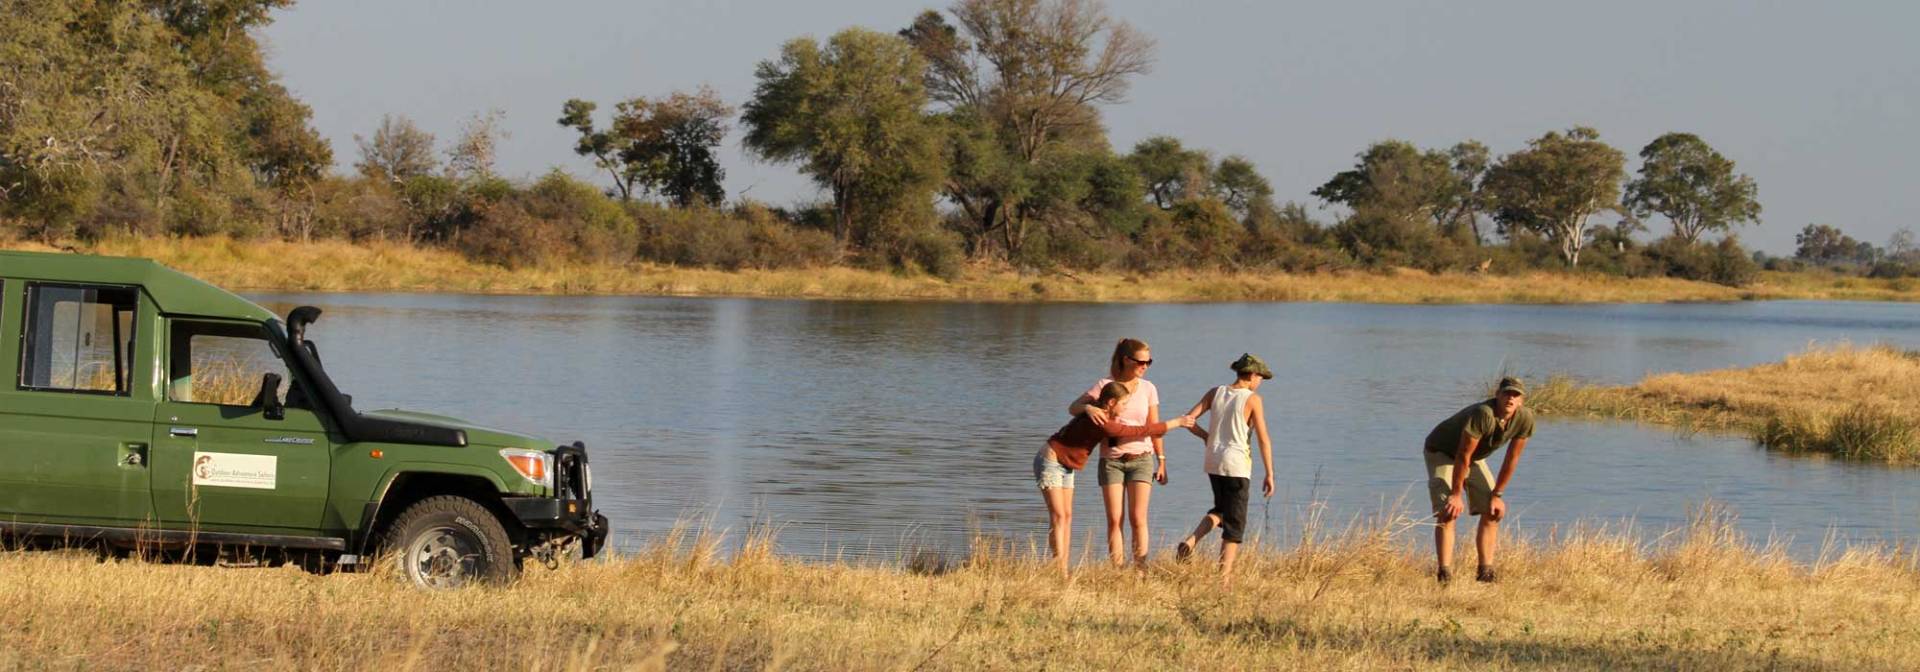 Okavango Fluss - Paradies in Namibia